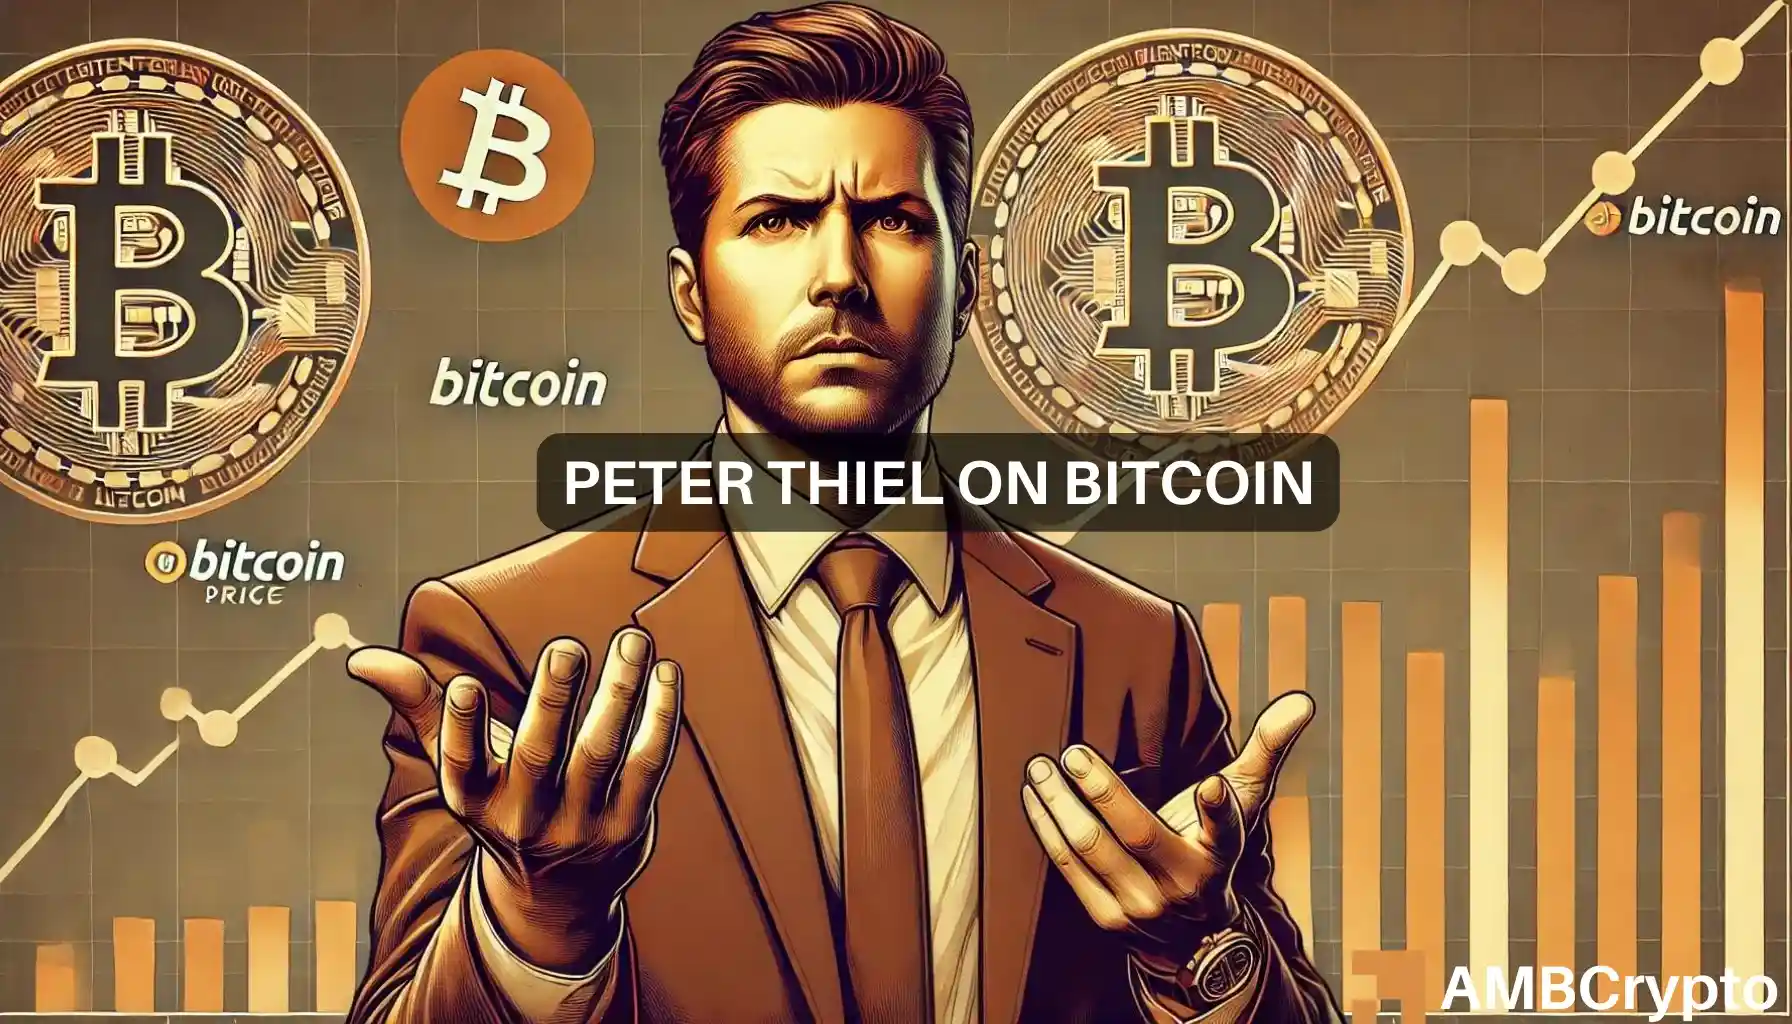 Peter Thiel on bitcoin